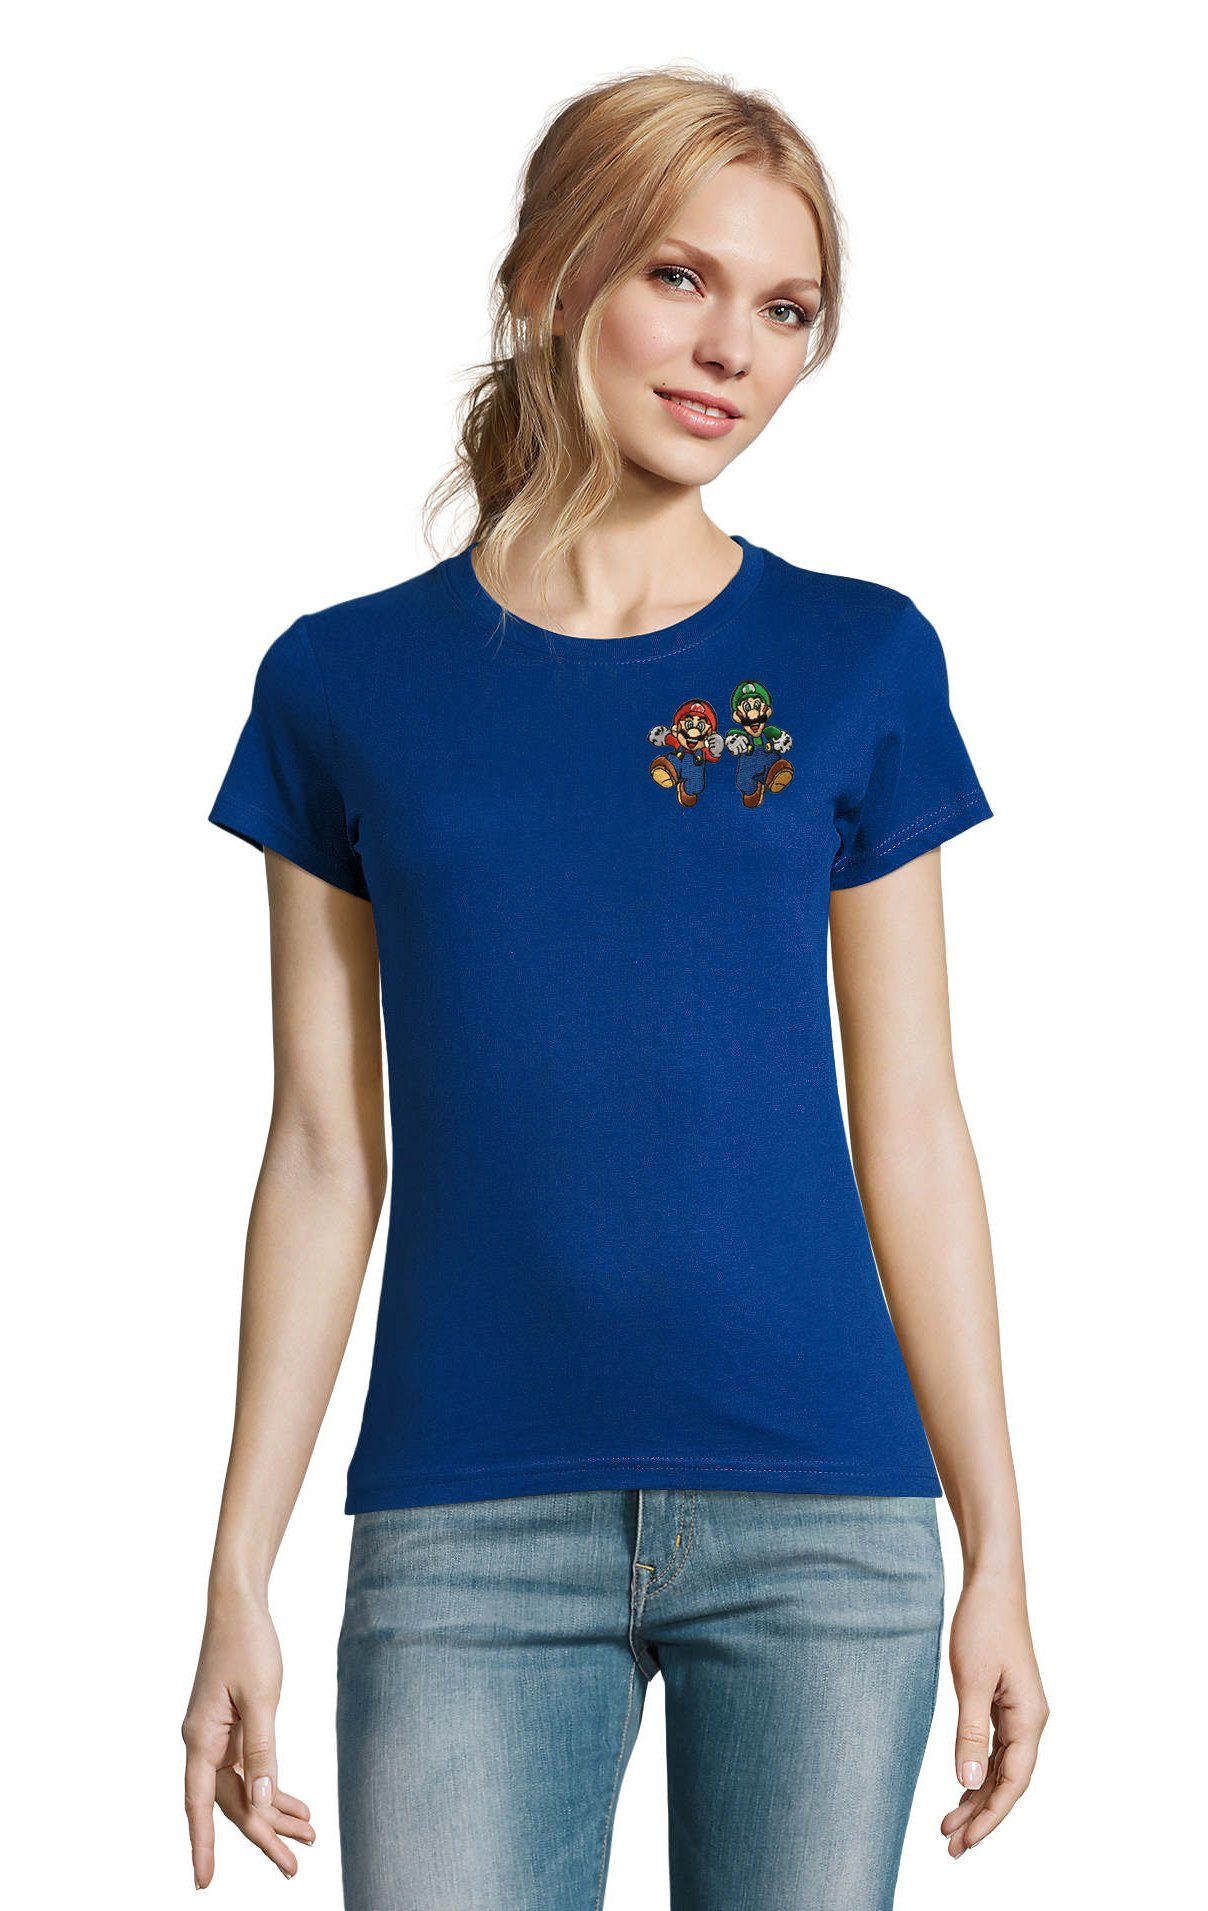 Gaming Mario & Stick Brust Yoshi Luigi Blau bestickt Brownie Damen T-Shirt Blondie Nintendo & Bowser